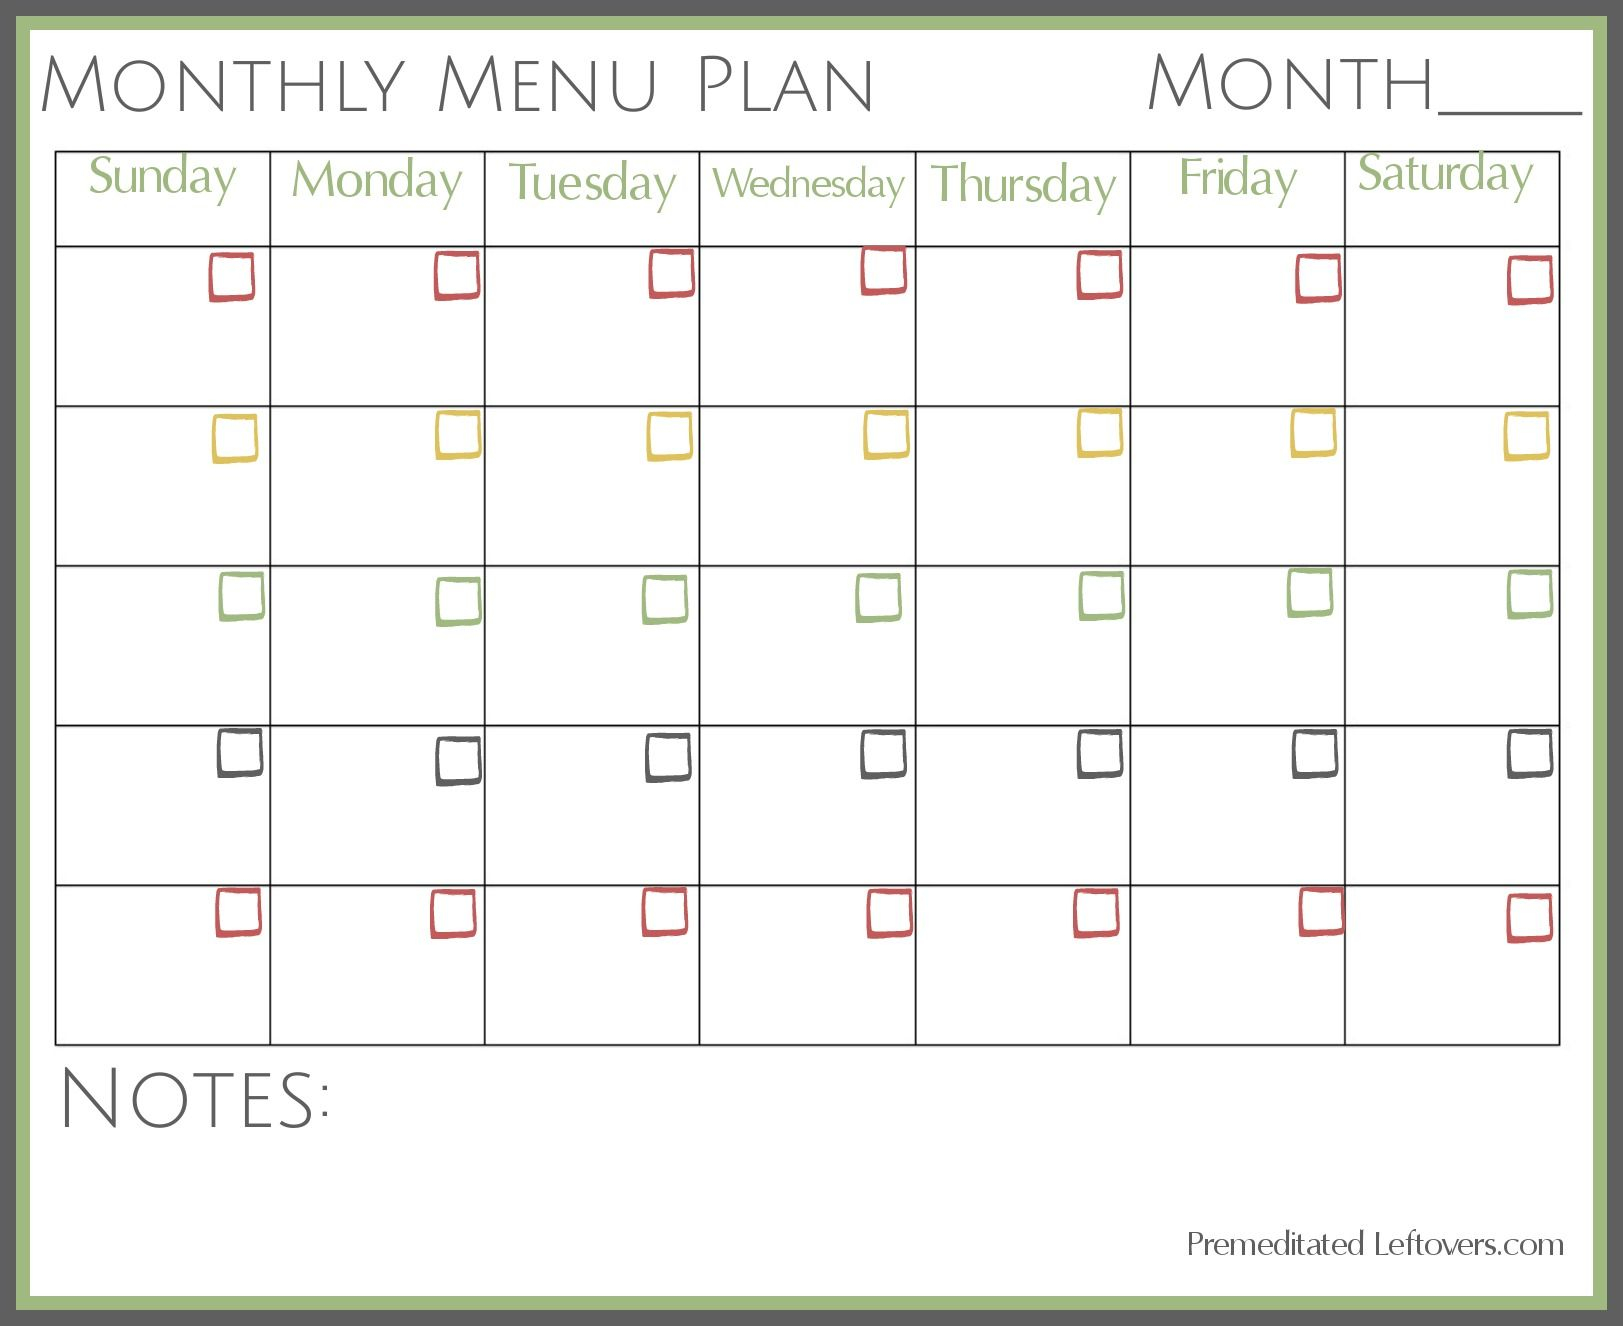 Free Printable Monthly Menu Plan Meal Planner Template 